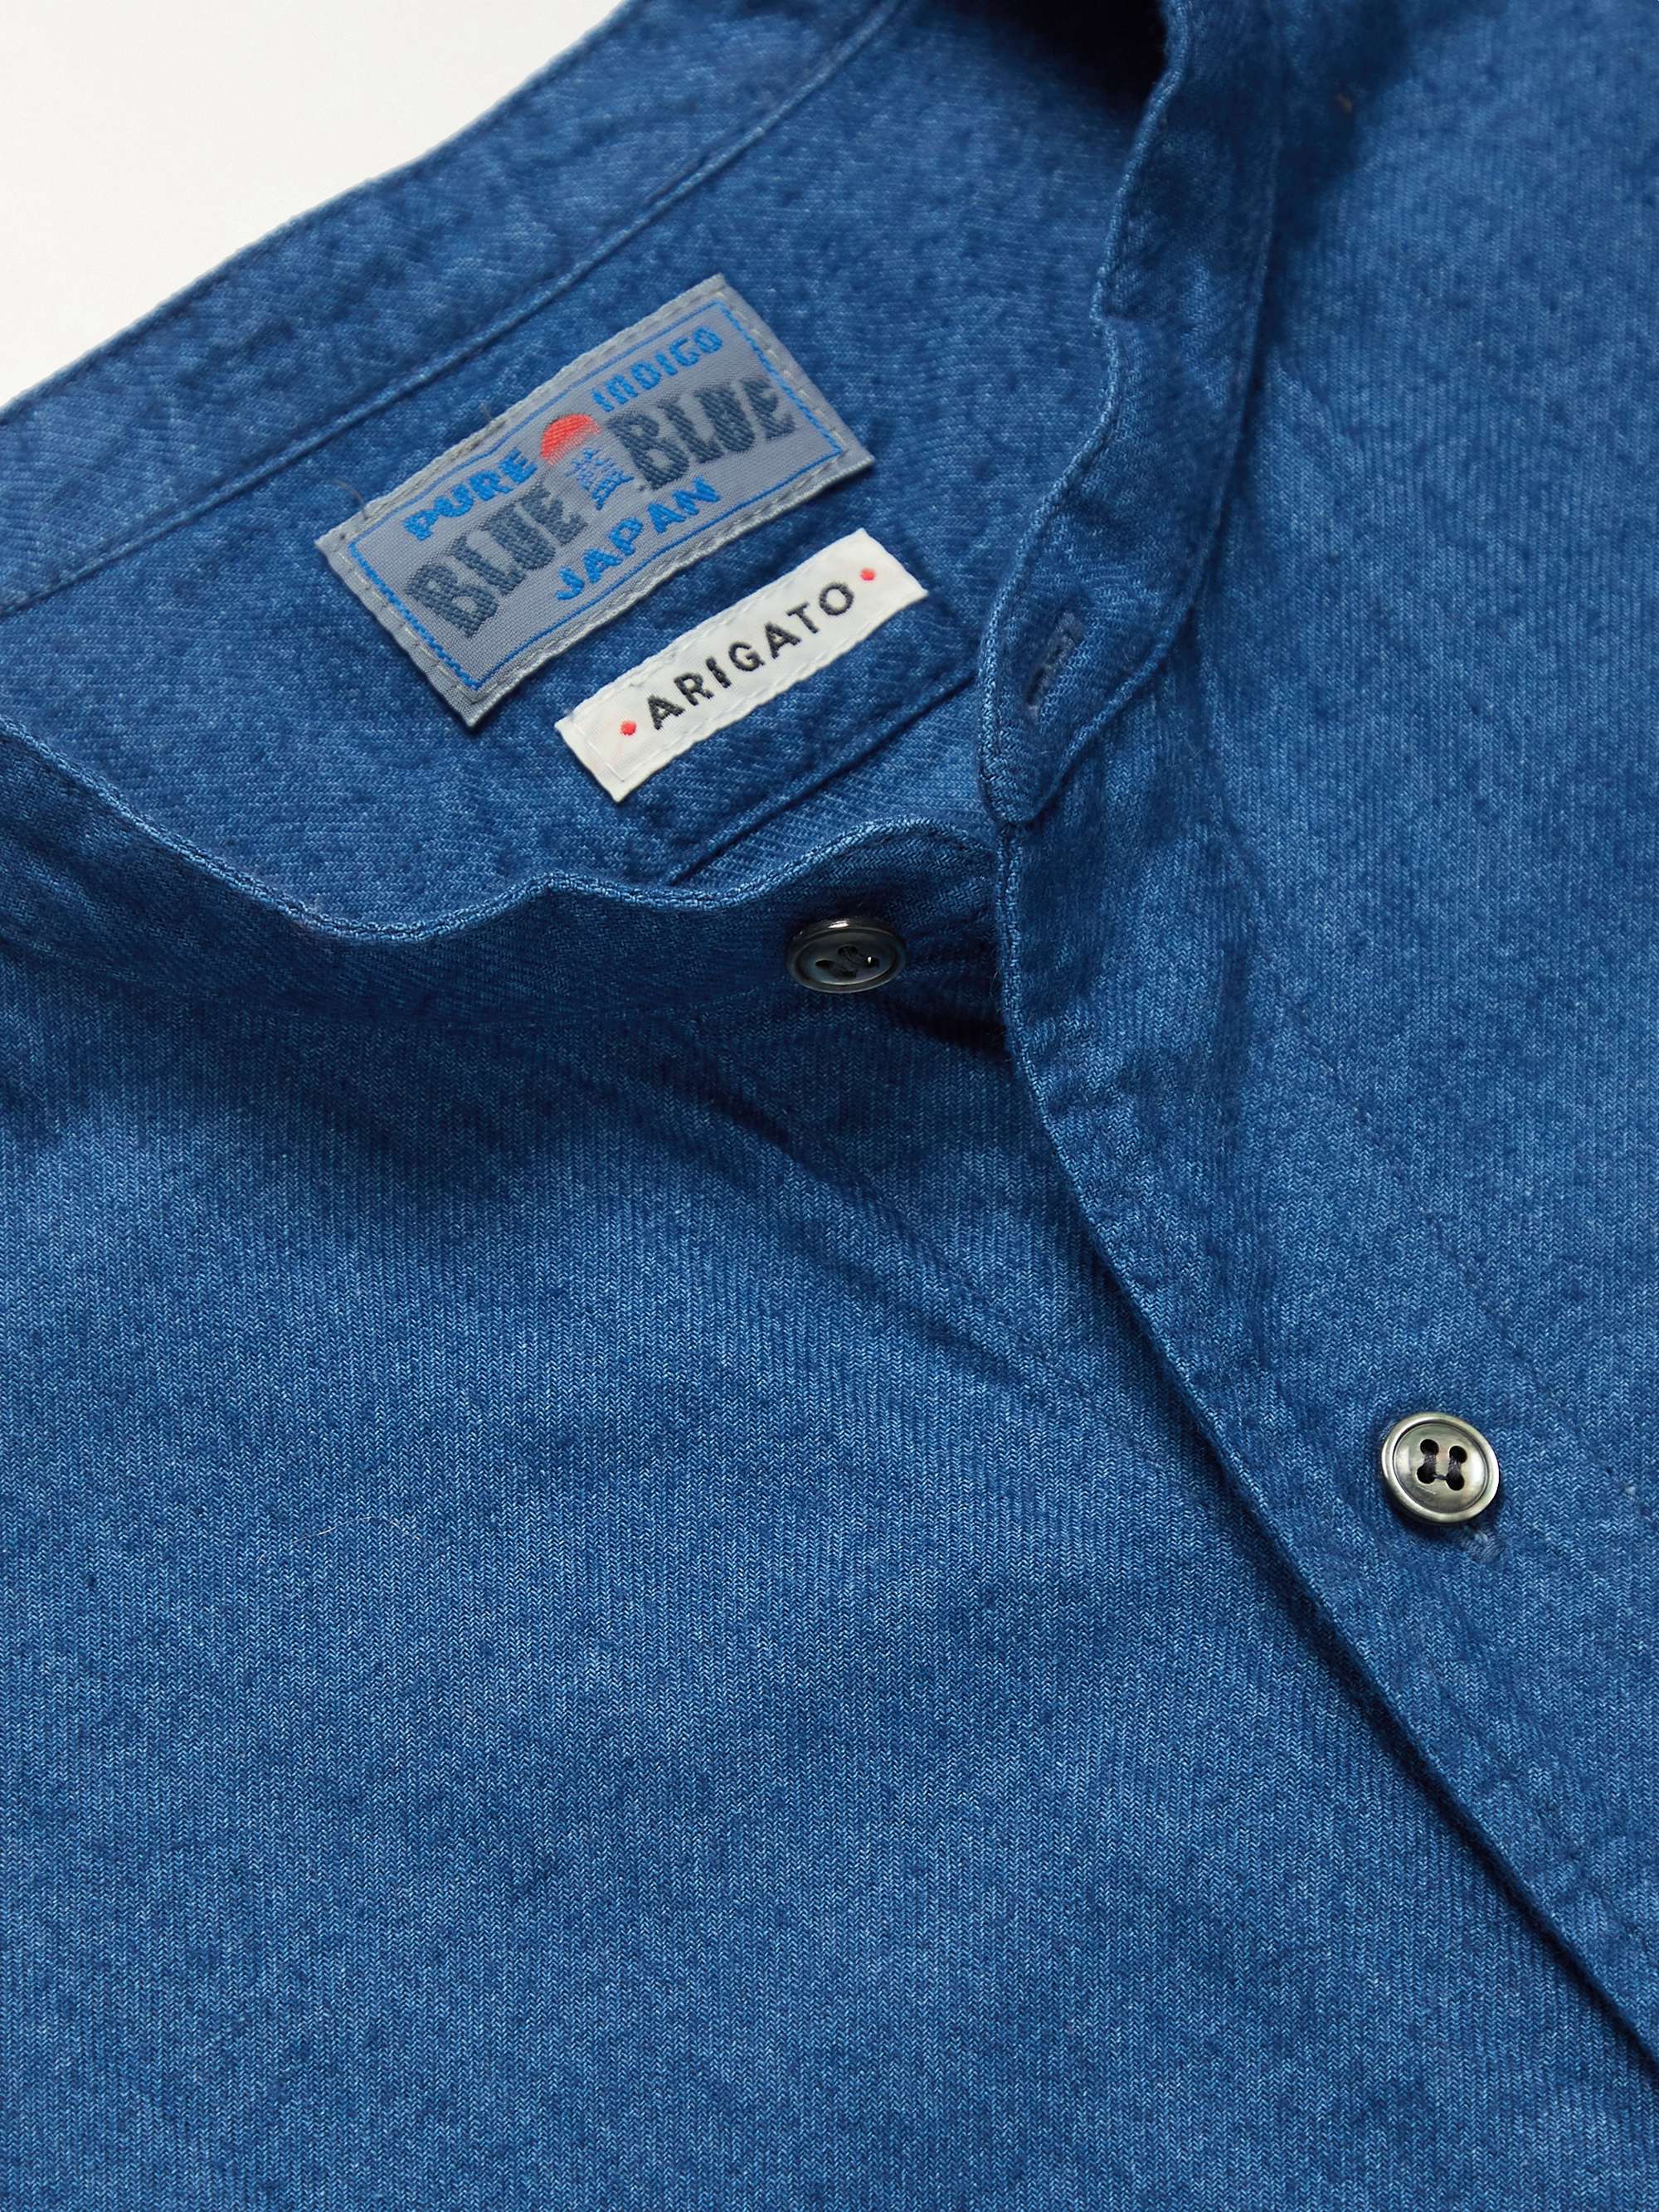 BLUE BLUE JAPAN Grandad-Collar Checked Panelled Cotton-Flannel Shirt